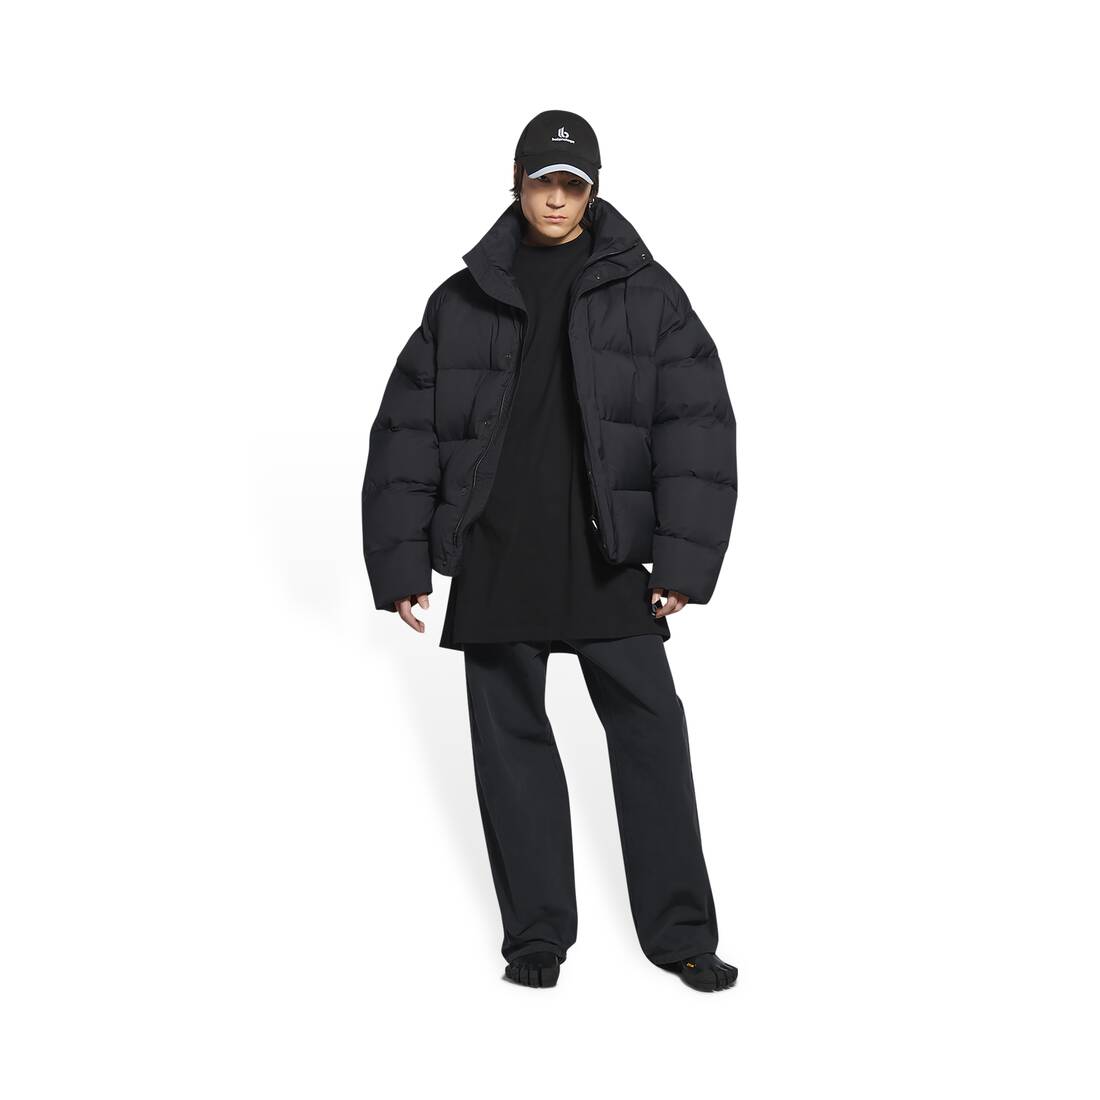 Medic kompakt Salme black balenciaga jacket